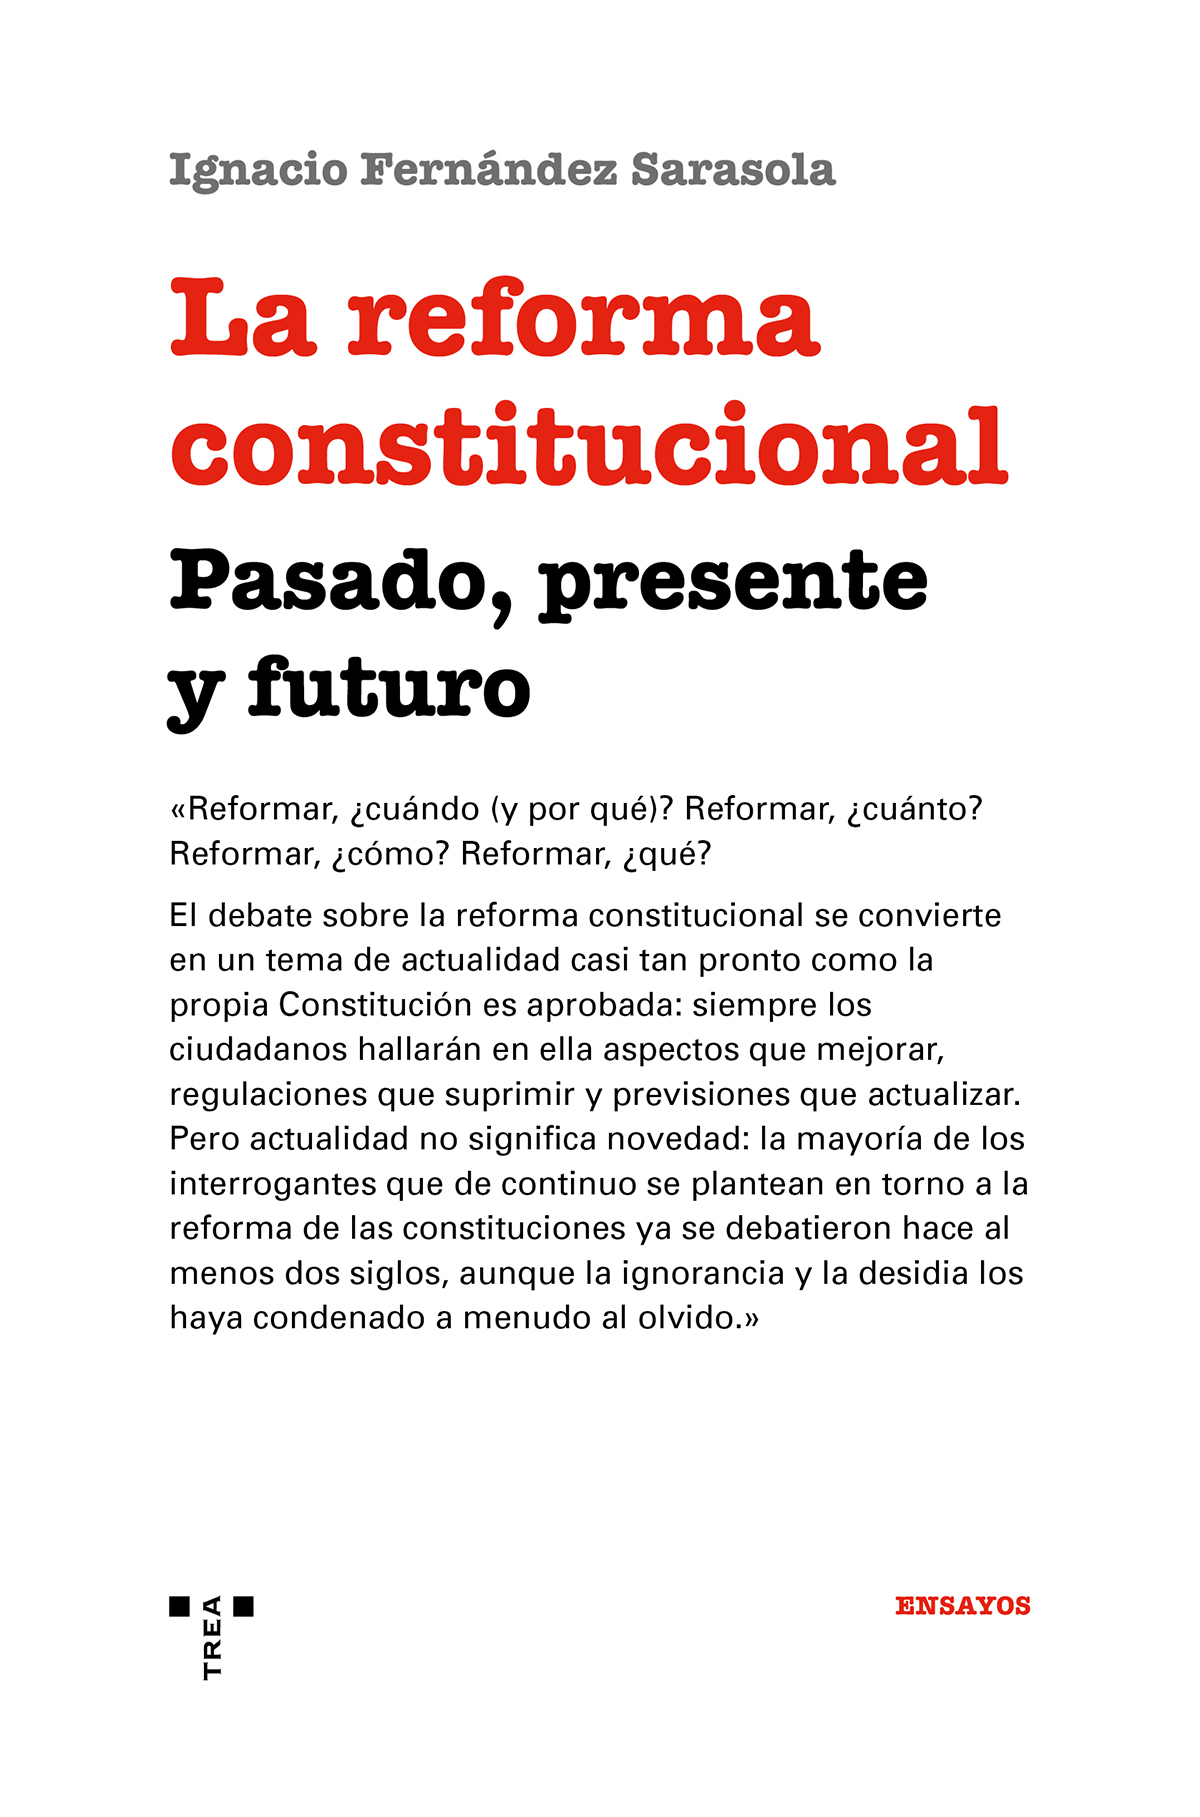 La reforma constitucional